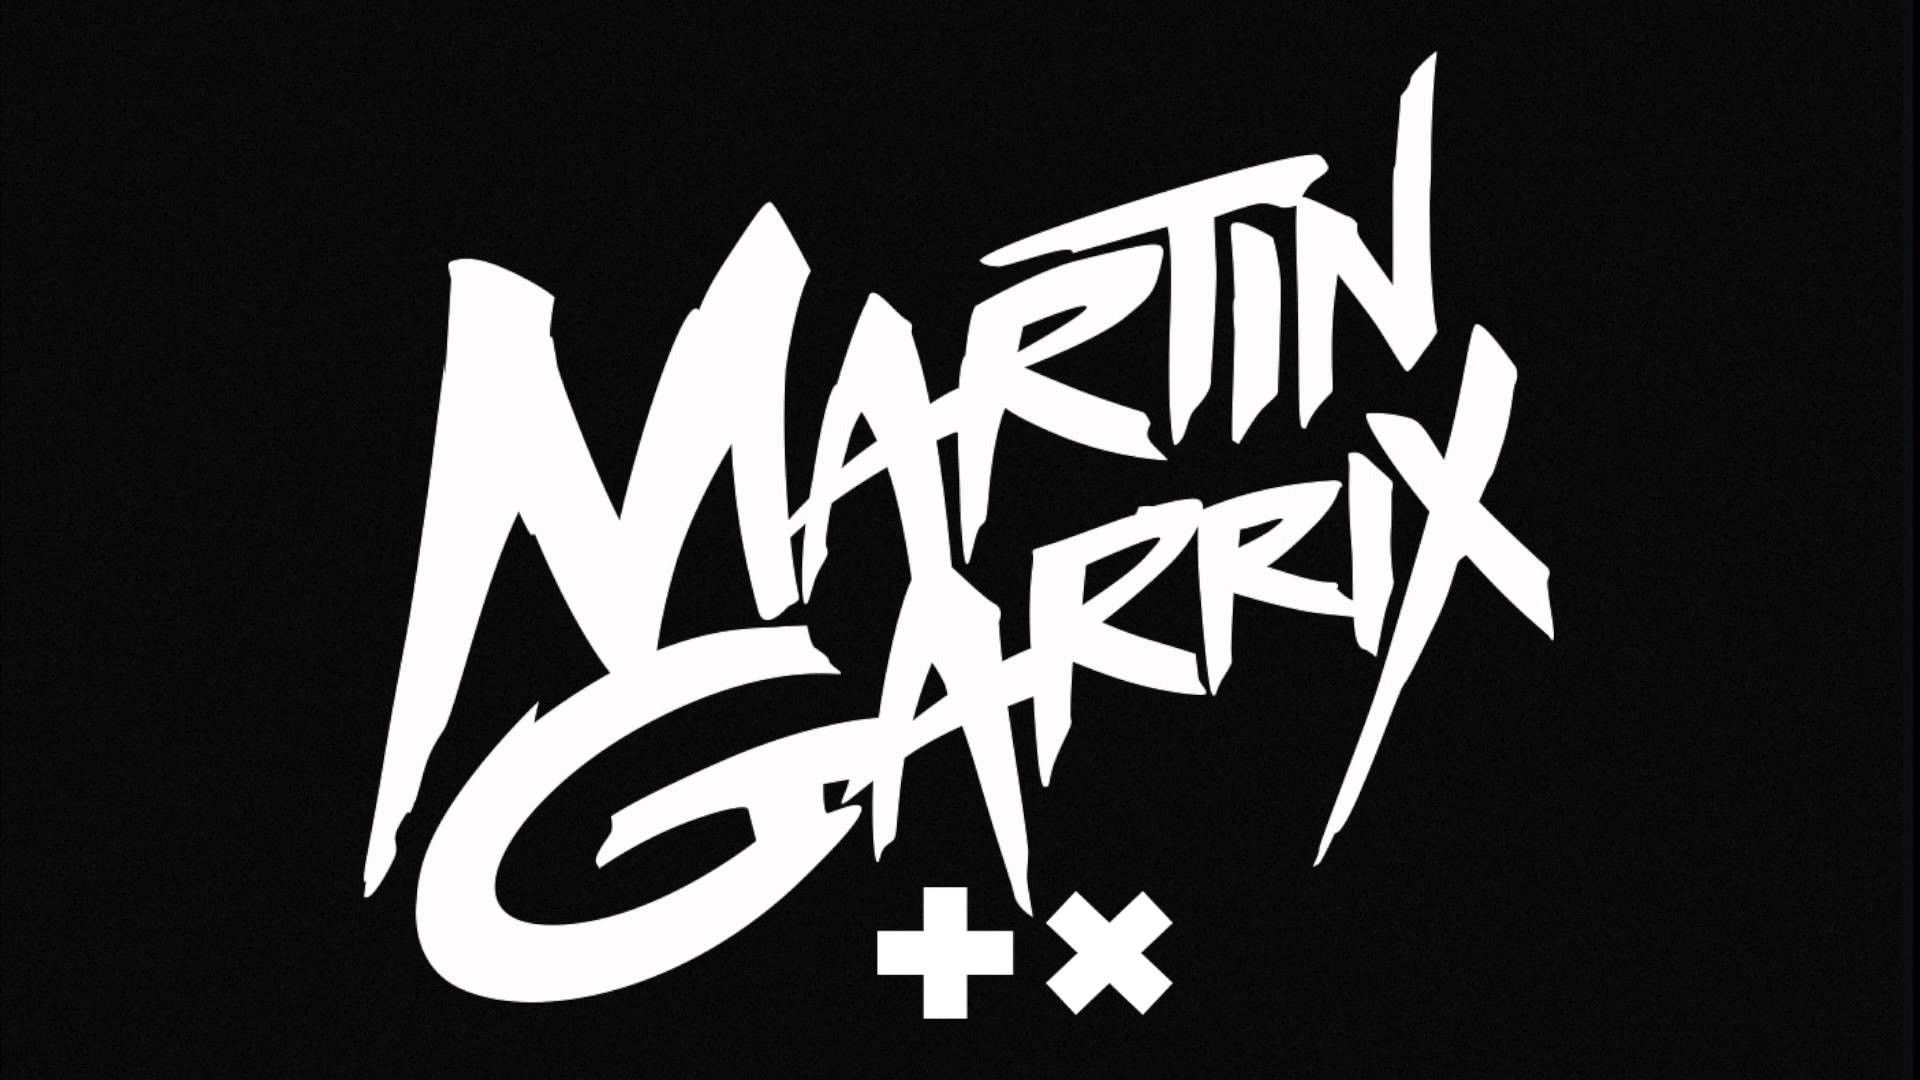 Martin Garrix Logo Wallpapers (67+ fotos)